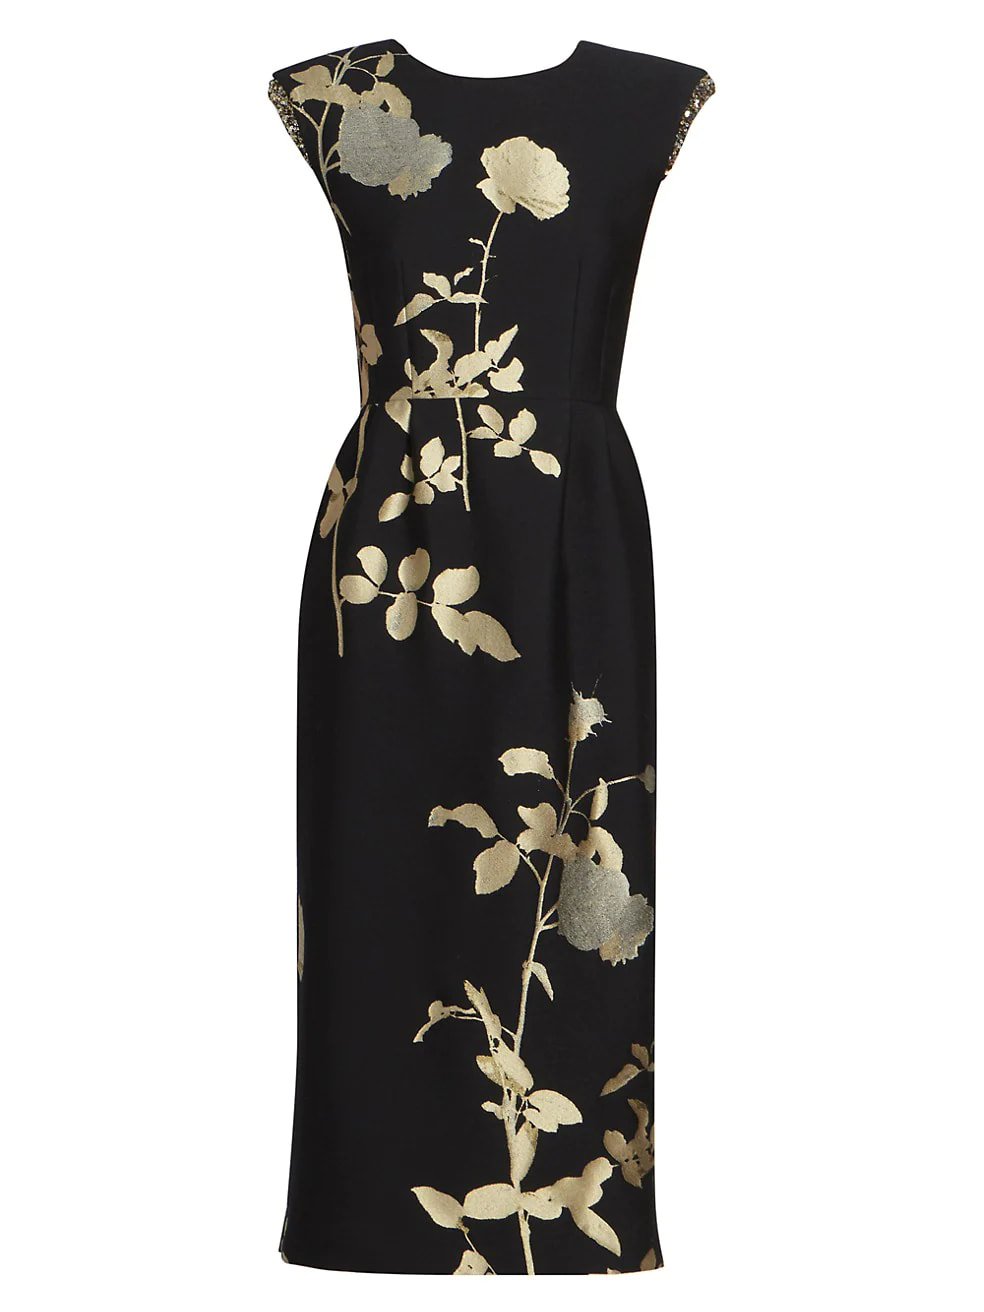 Dries Van Noten black and gold floral jacquard midi dress